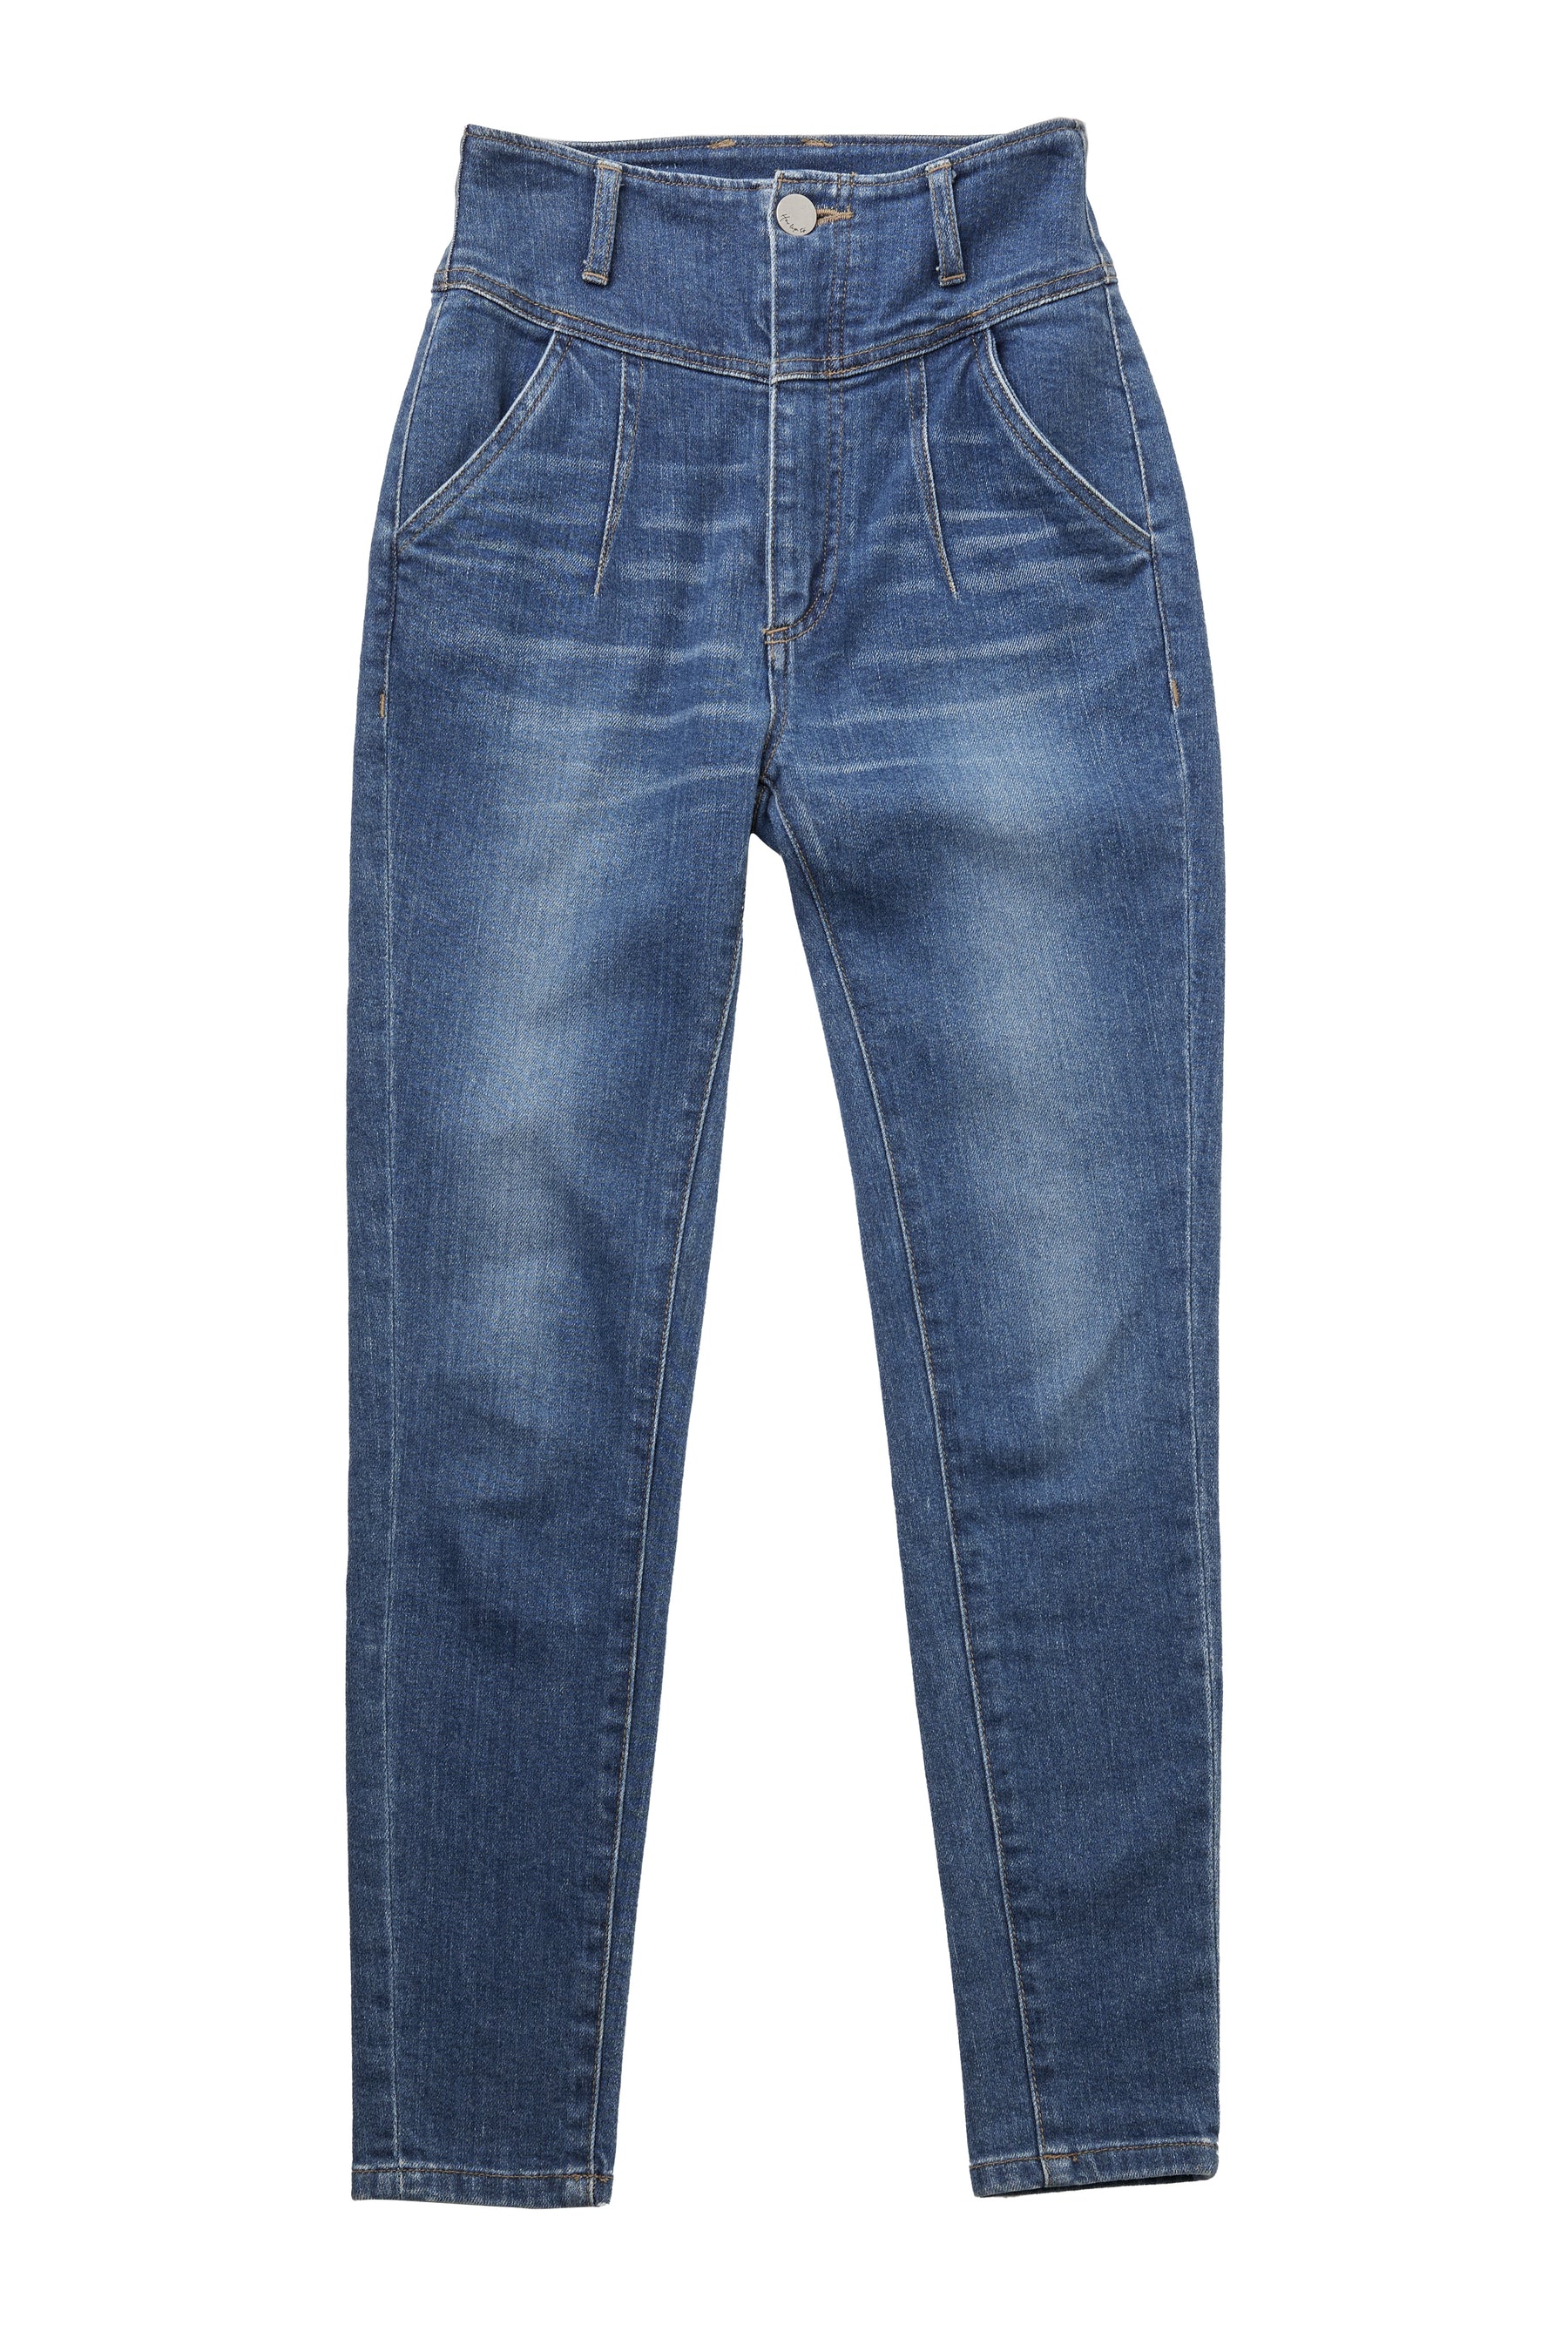 Herlipto Paris High Rise Jeans 25インチ